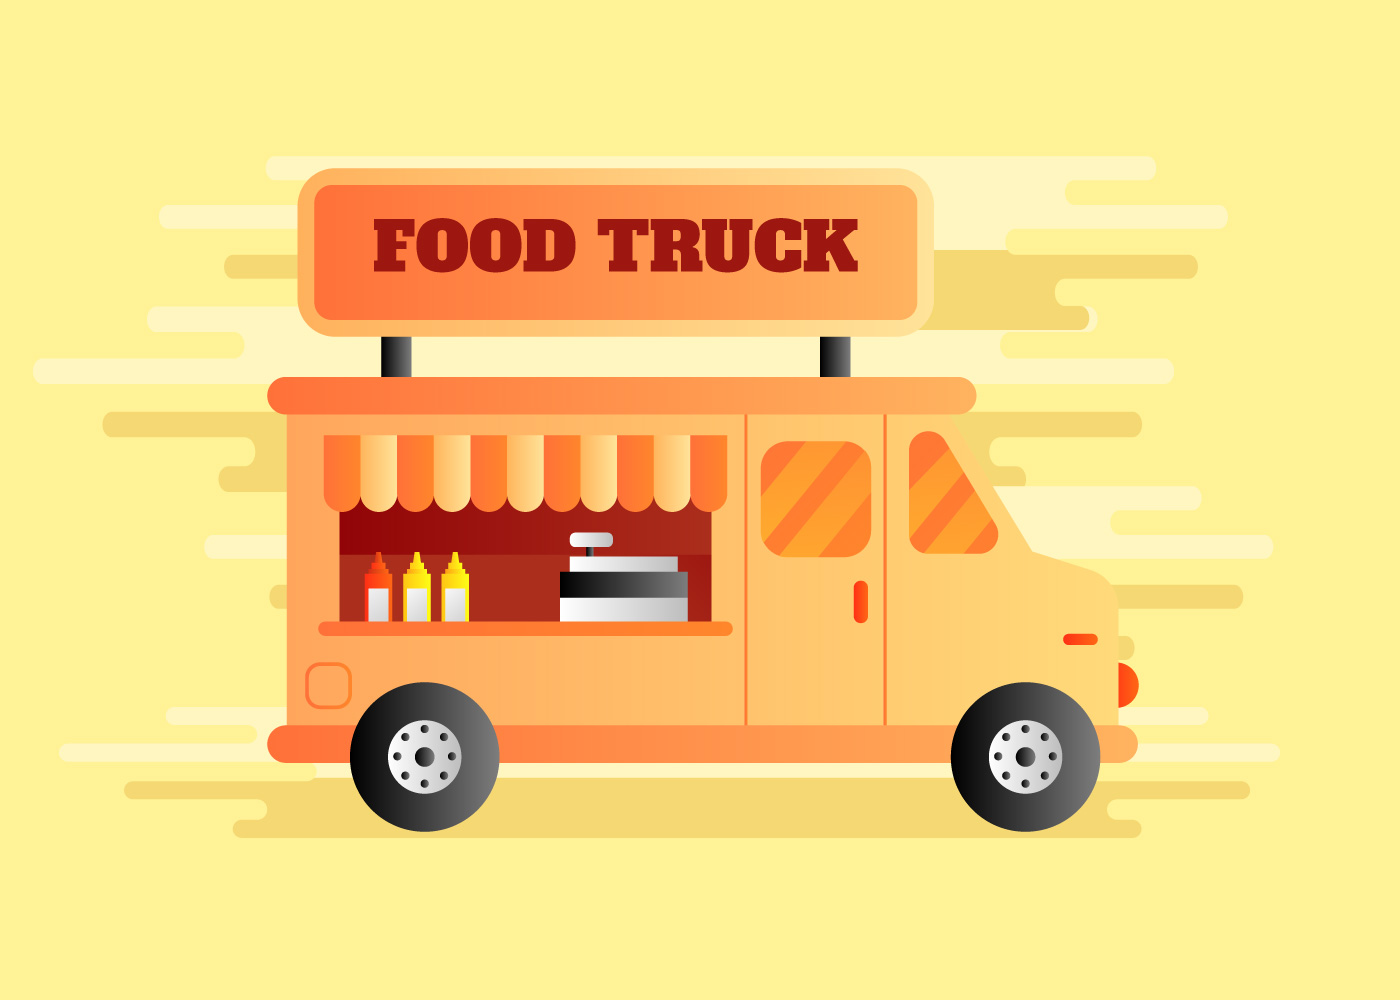 Food Truck Vector Illustration 209162 Vector Art at Vecteezy